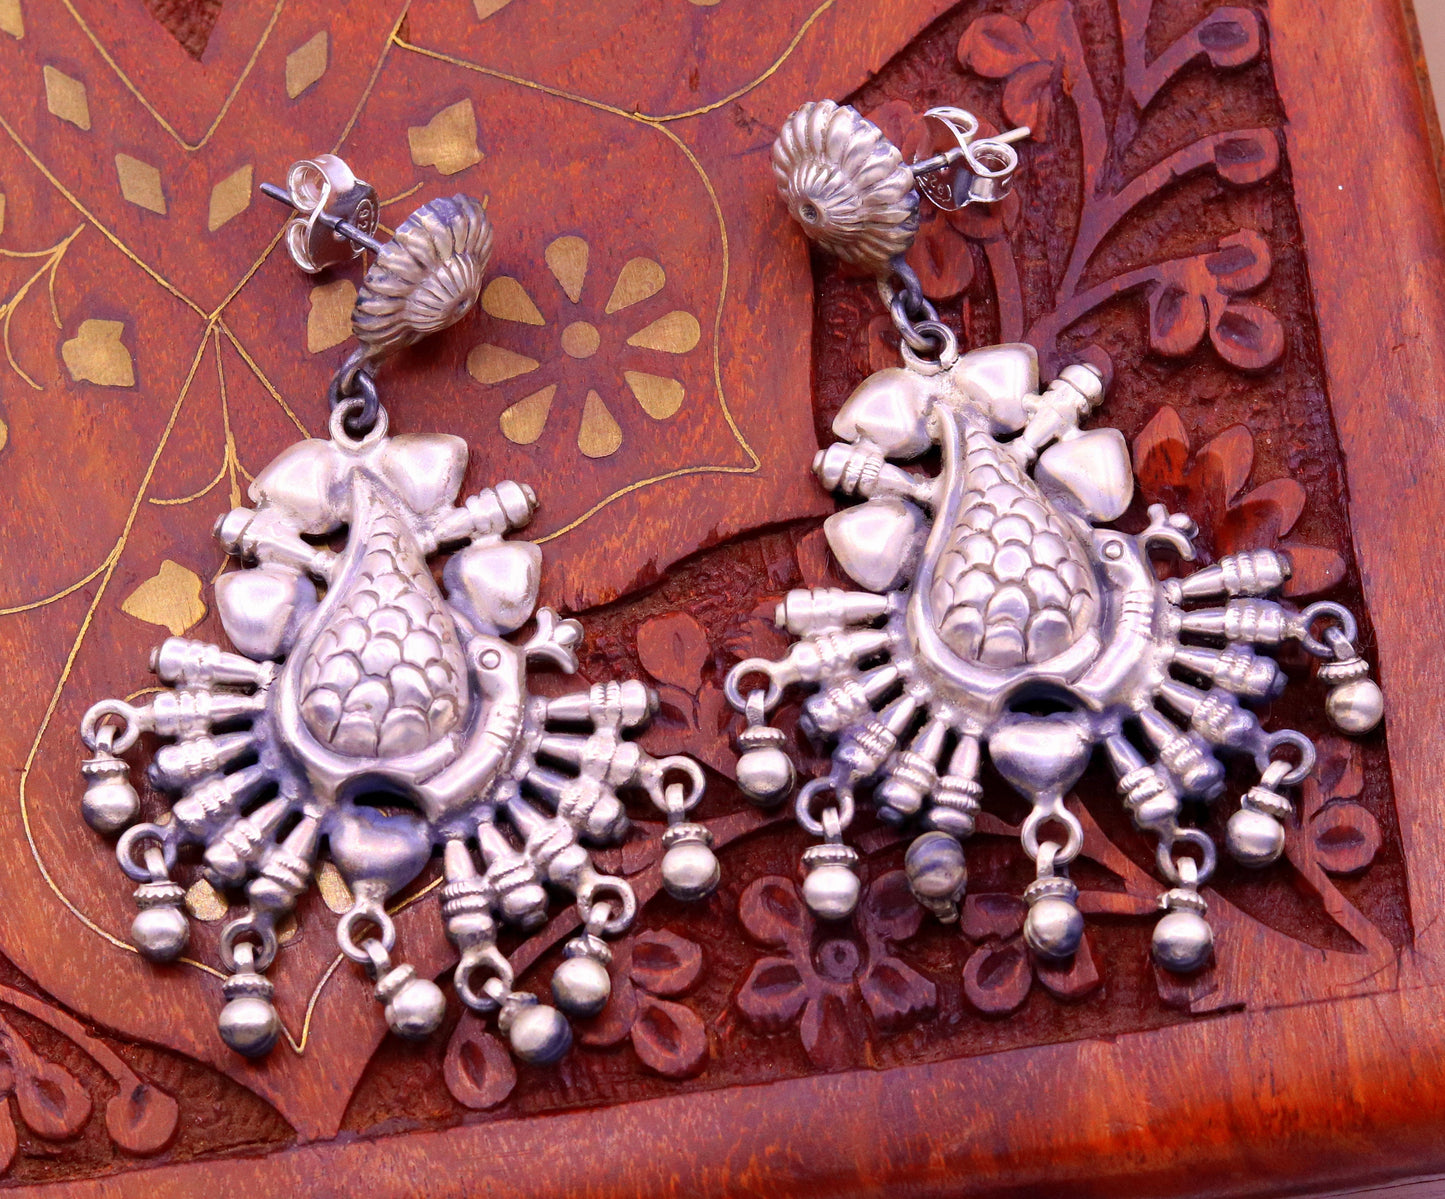 925 sterling silver handmade fabulous peacock stud earring dangle hanging drops bells, vintage design tribal jhumki belly dance jewelry s759 - TRIBAL ORNAMENTS